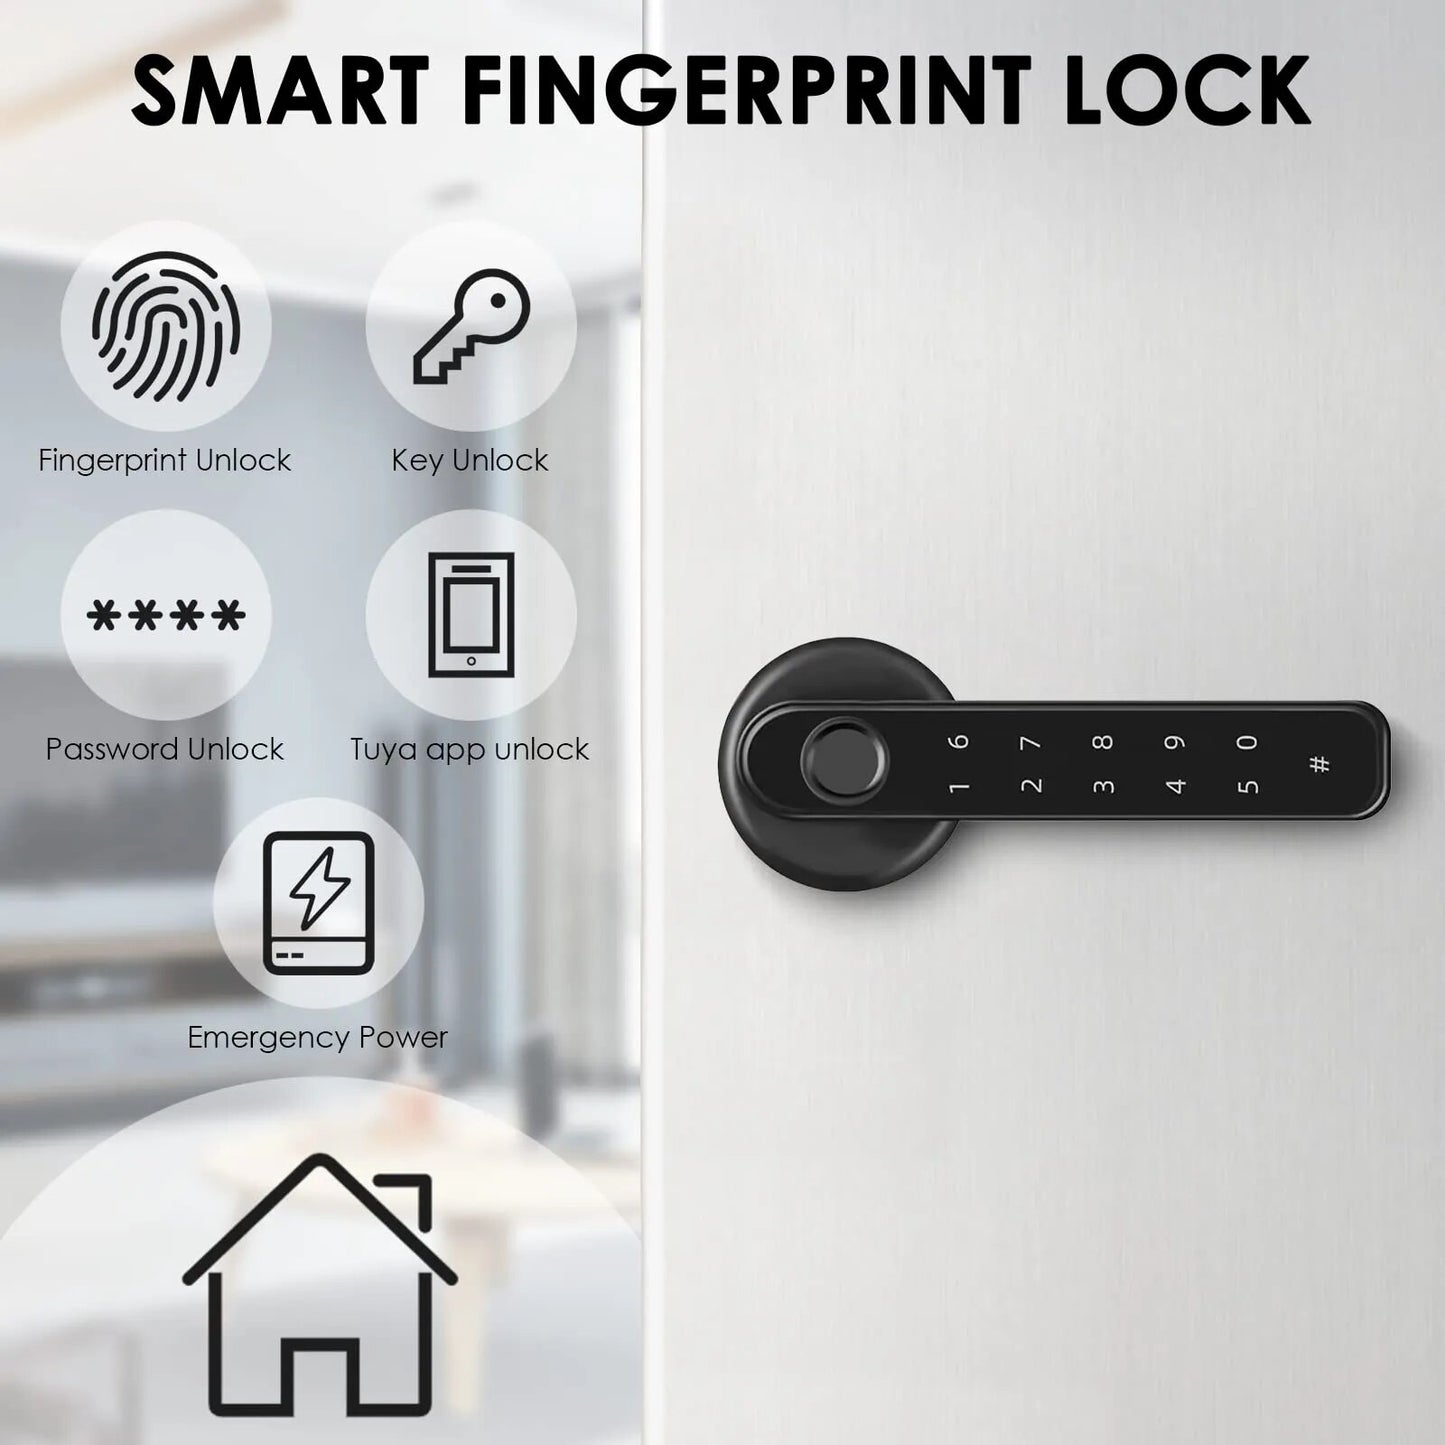 Your Next-Gen Biometric Smart Security| Electronic Digital Lock